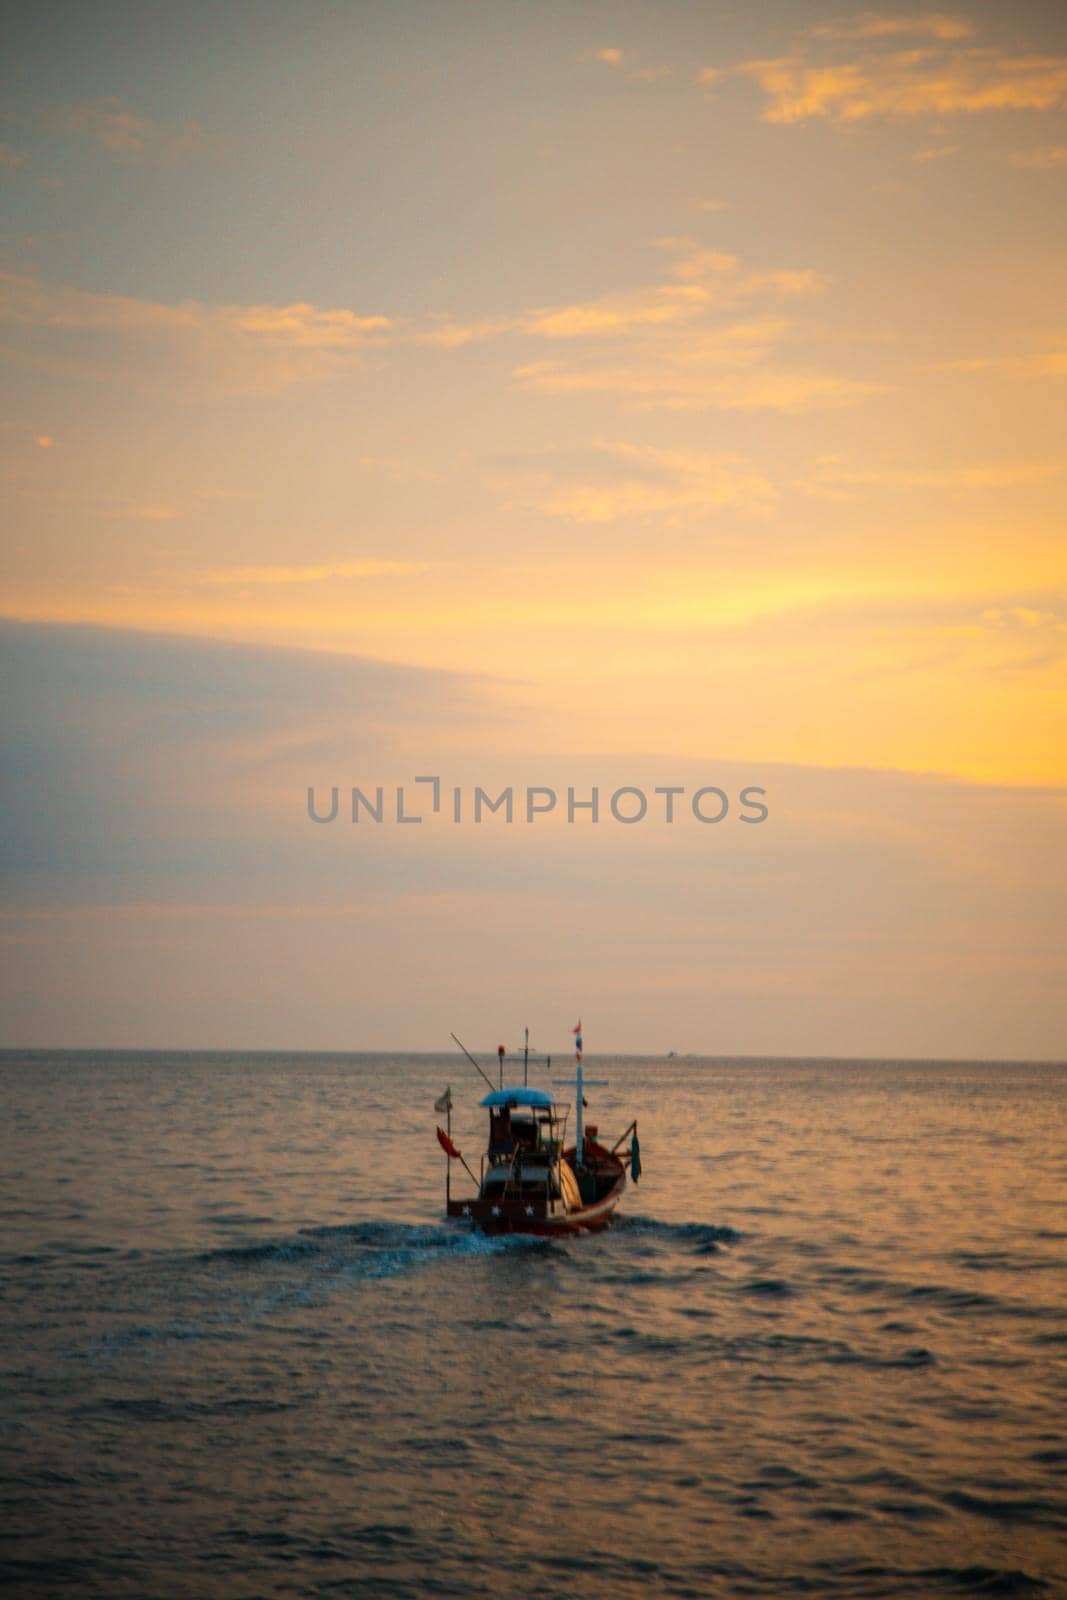 Sailing boat during sunset at Promthep Cape in Phuket peninsula, Thailand. High quality photo